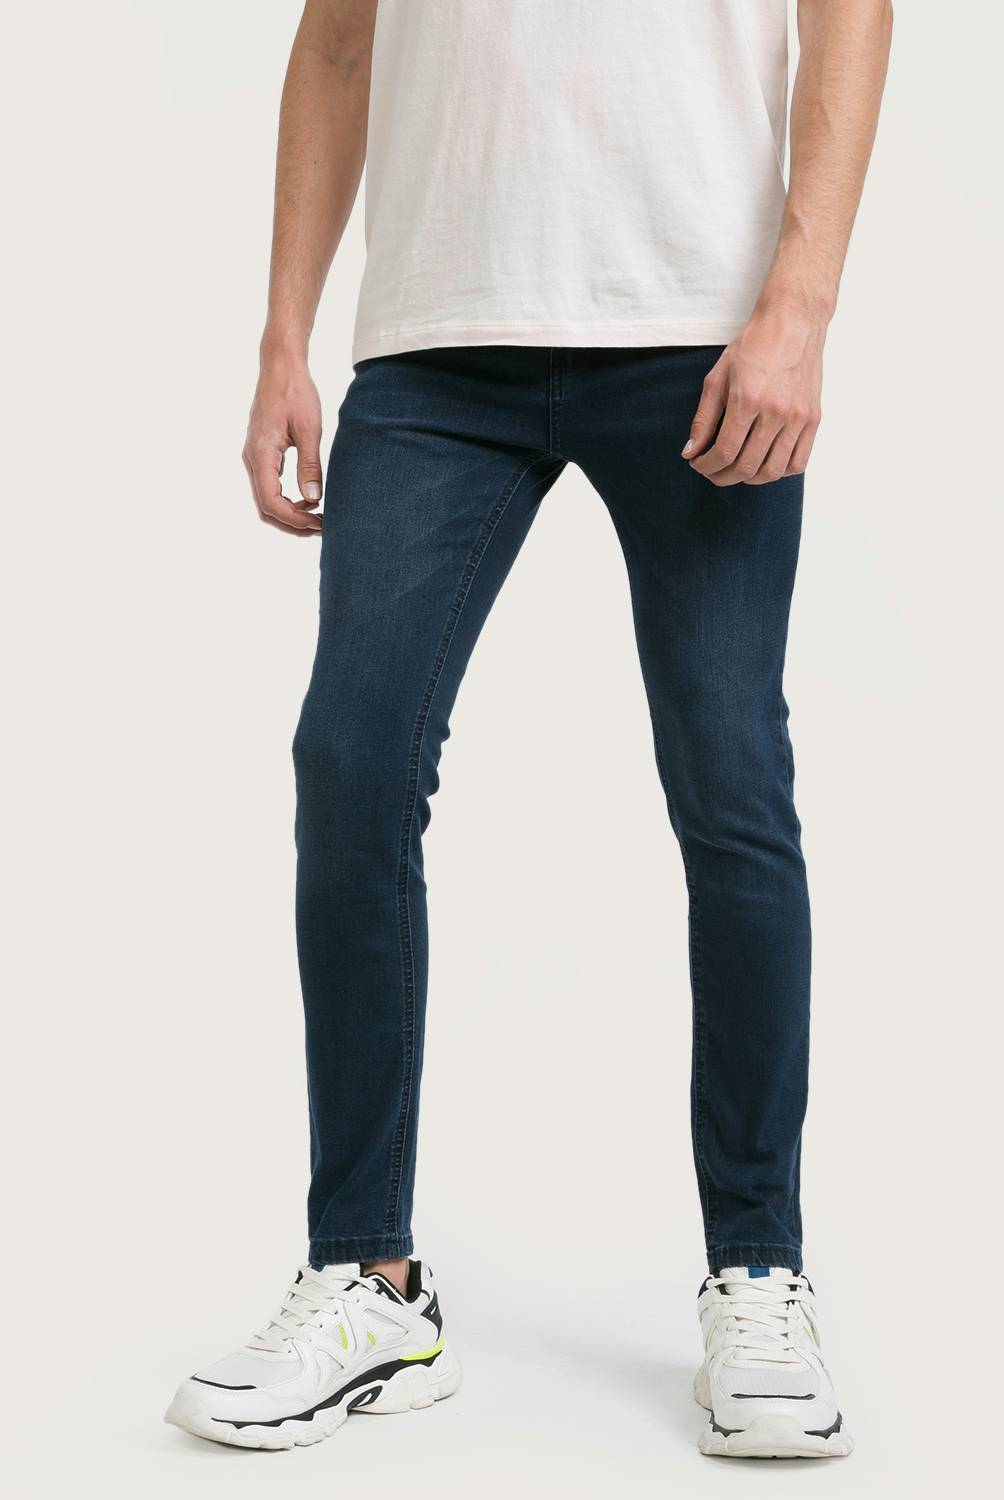 AMERICANINO - Jeans Super Skinny Hombre